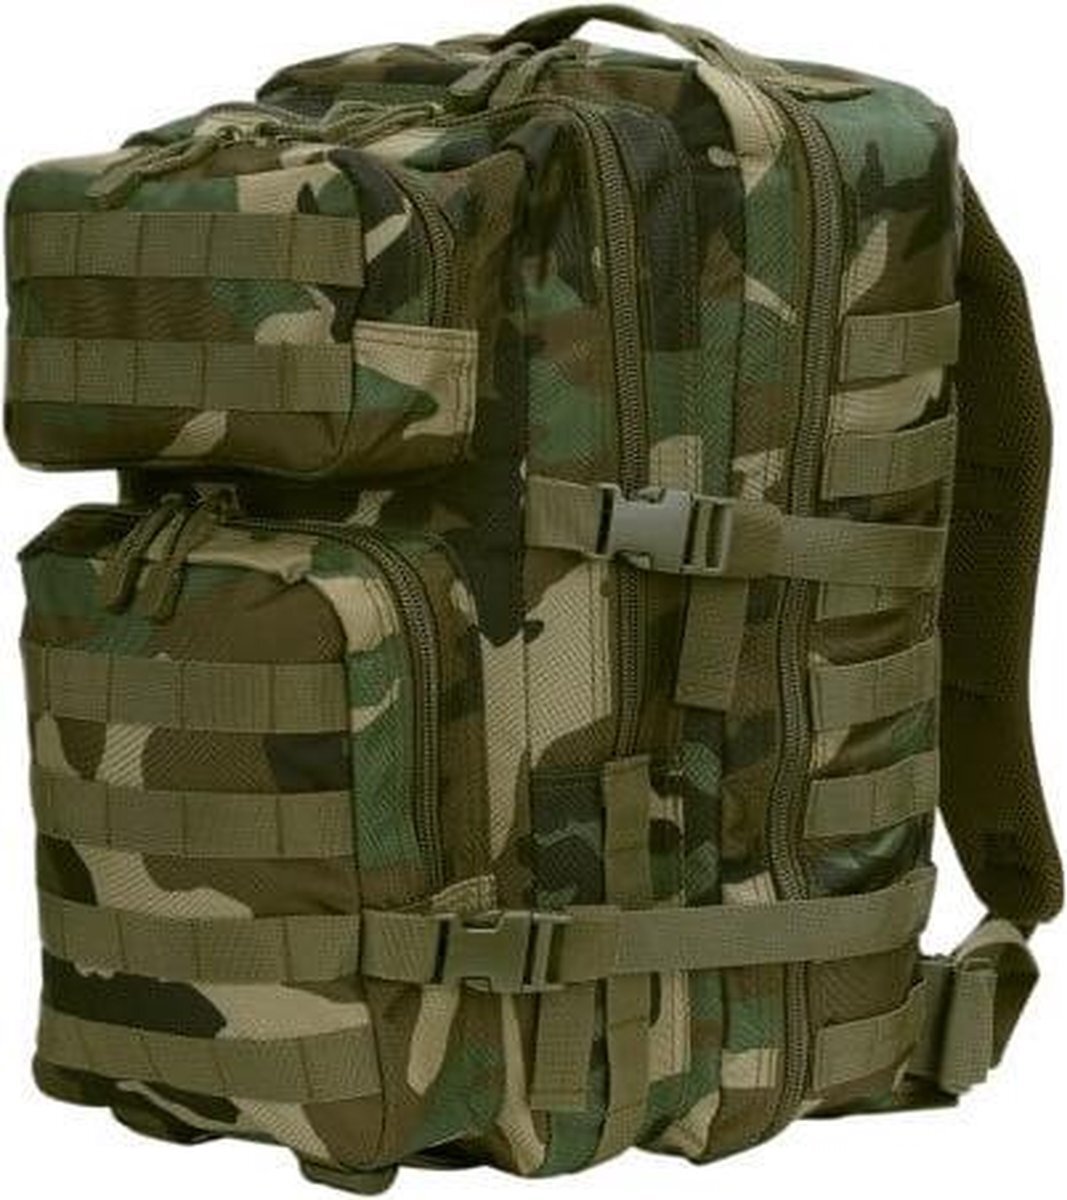 101 inc Mountain backpack 45 liter US leger model - Camo Woodland